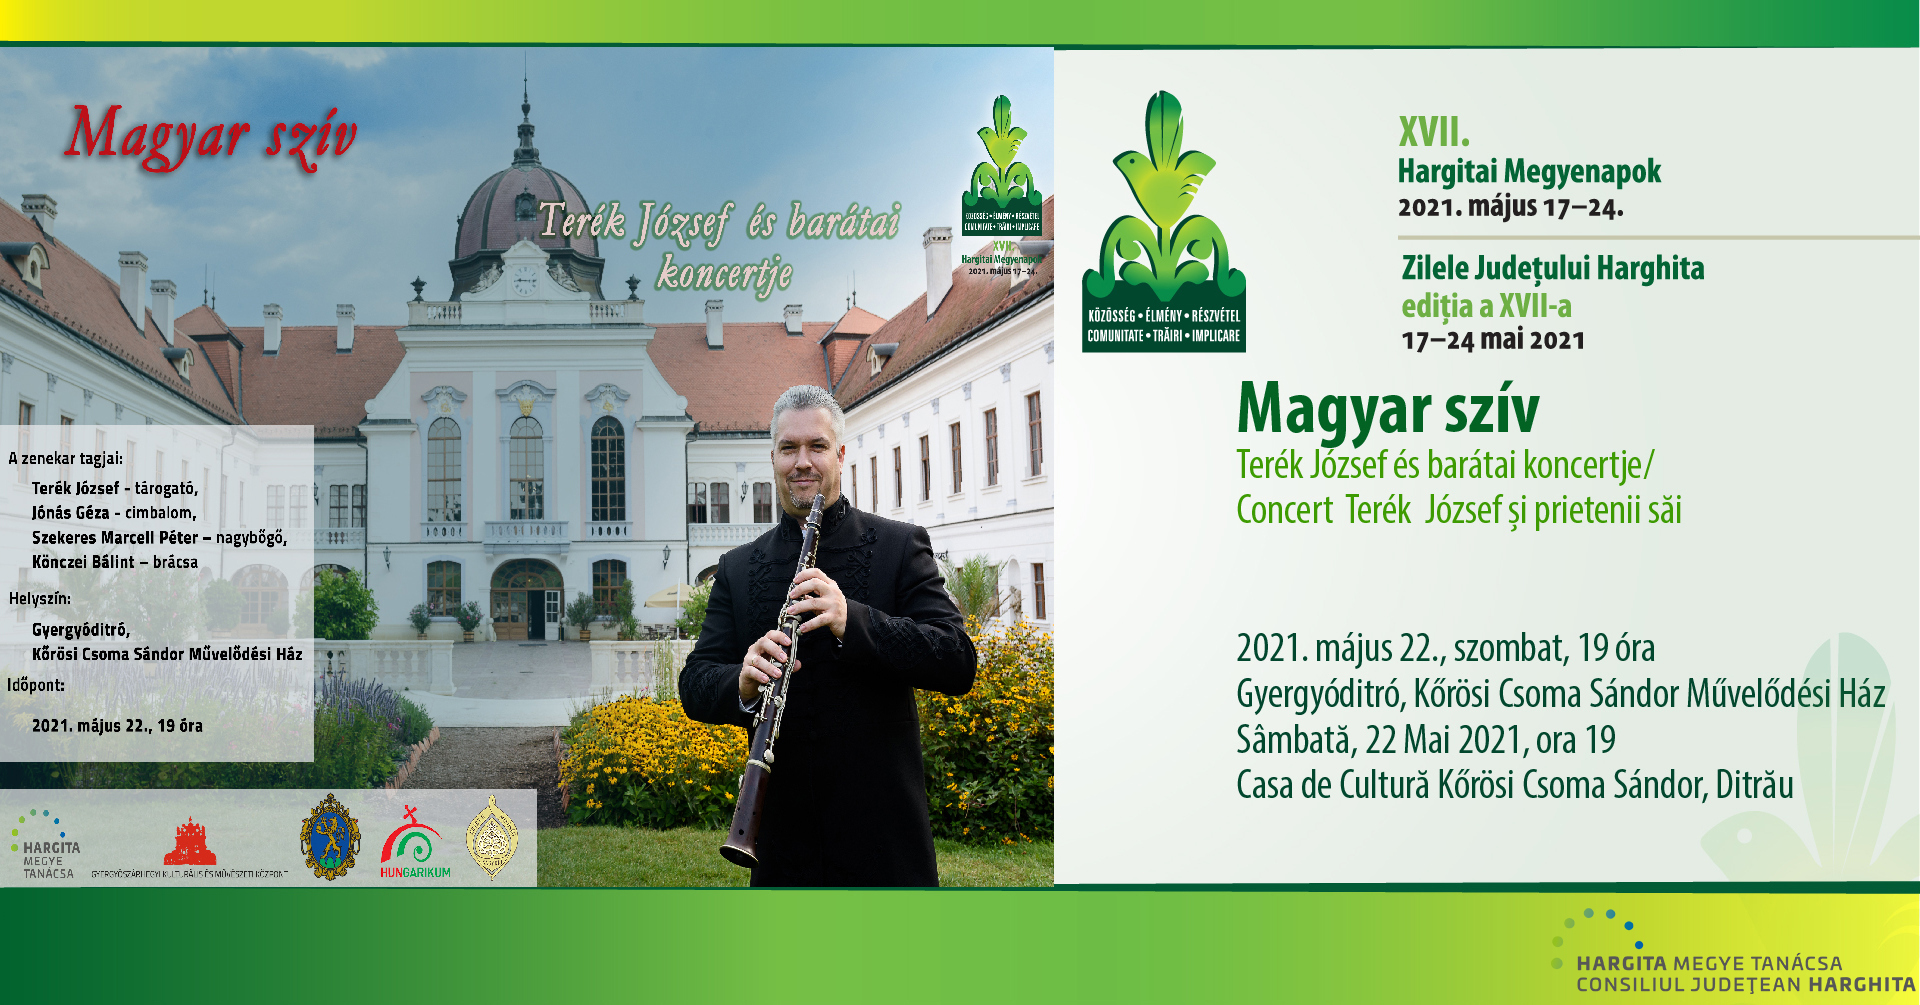  Magyar szív- Concert  Terék  József și prietenii  